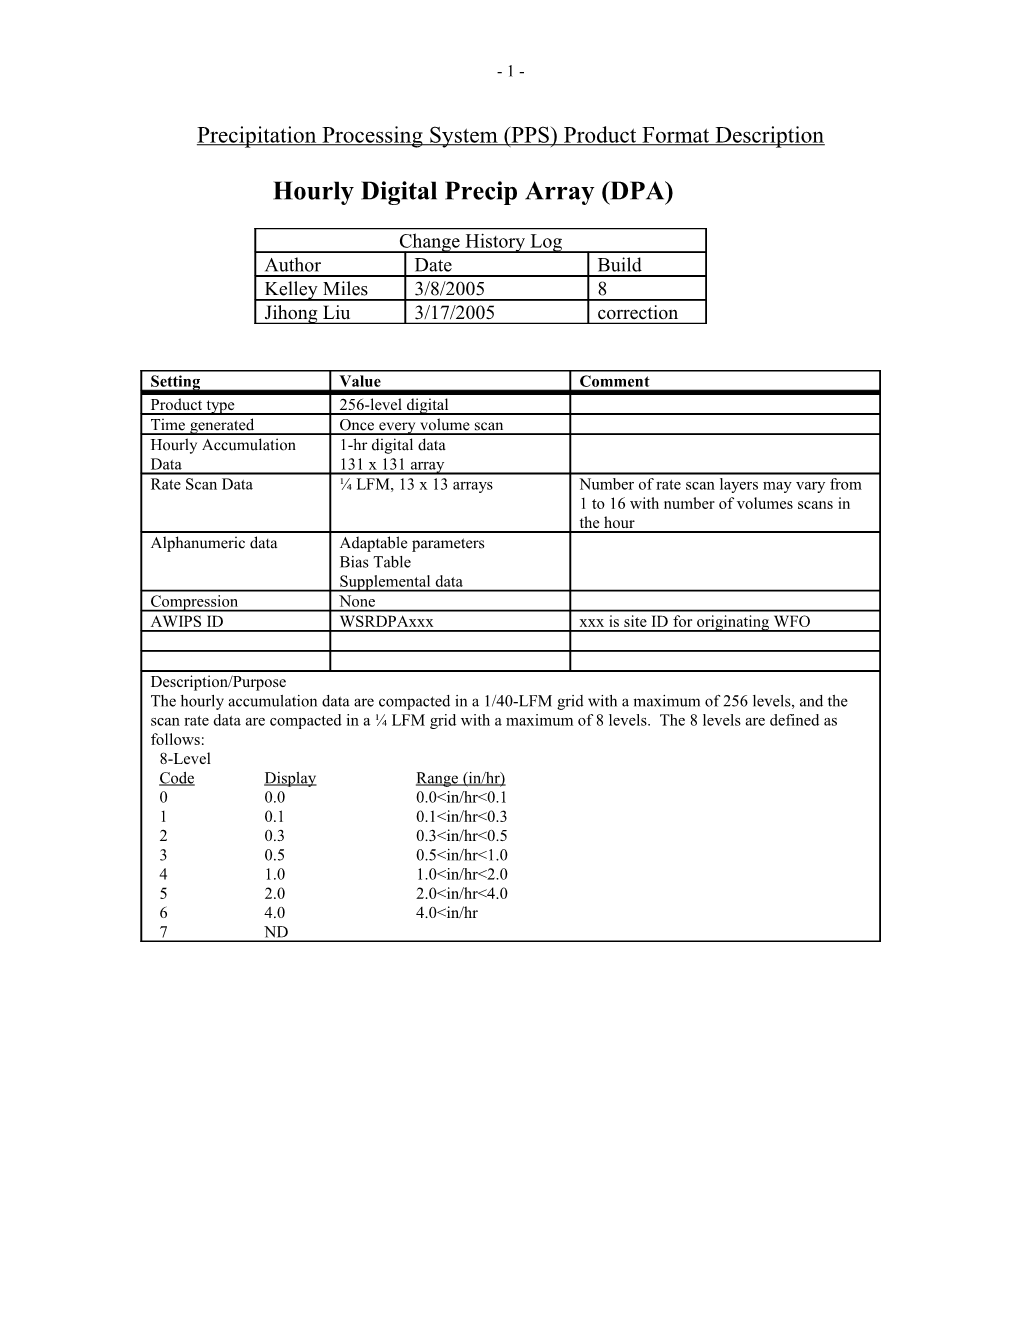 Precipitation Processing System (PPS) Product Format Description s1